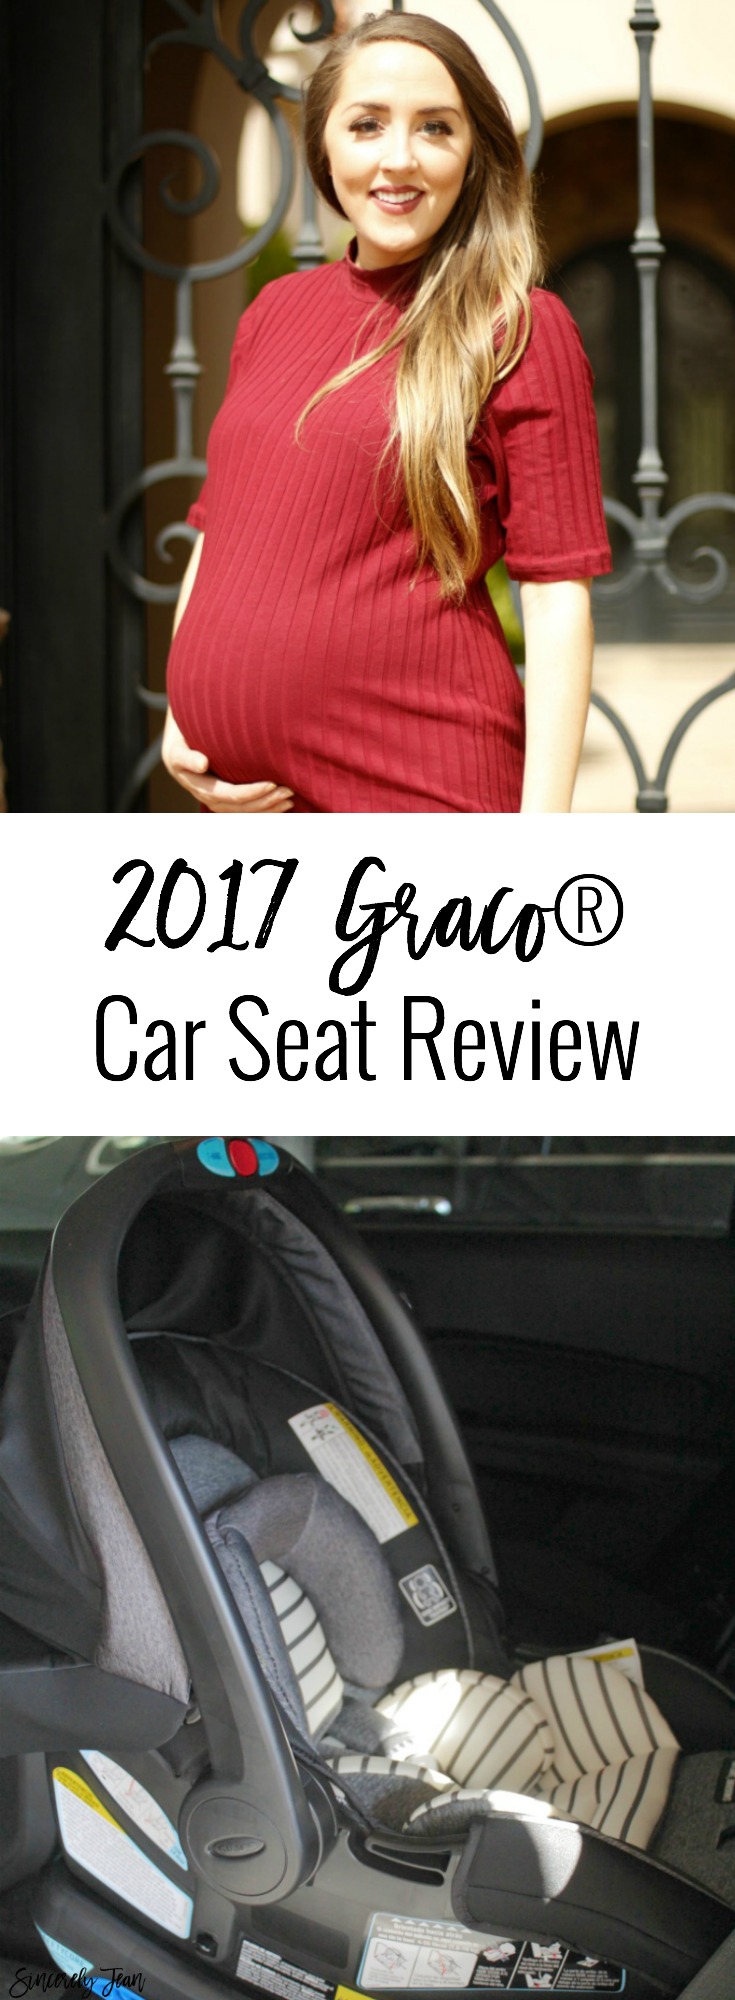 SincerelyJean.com Graco infant car seat review, 2017